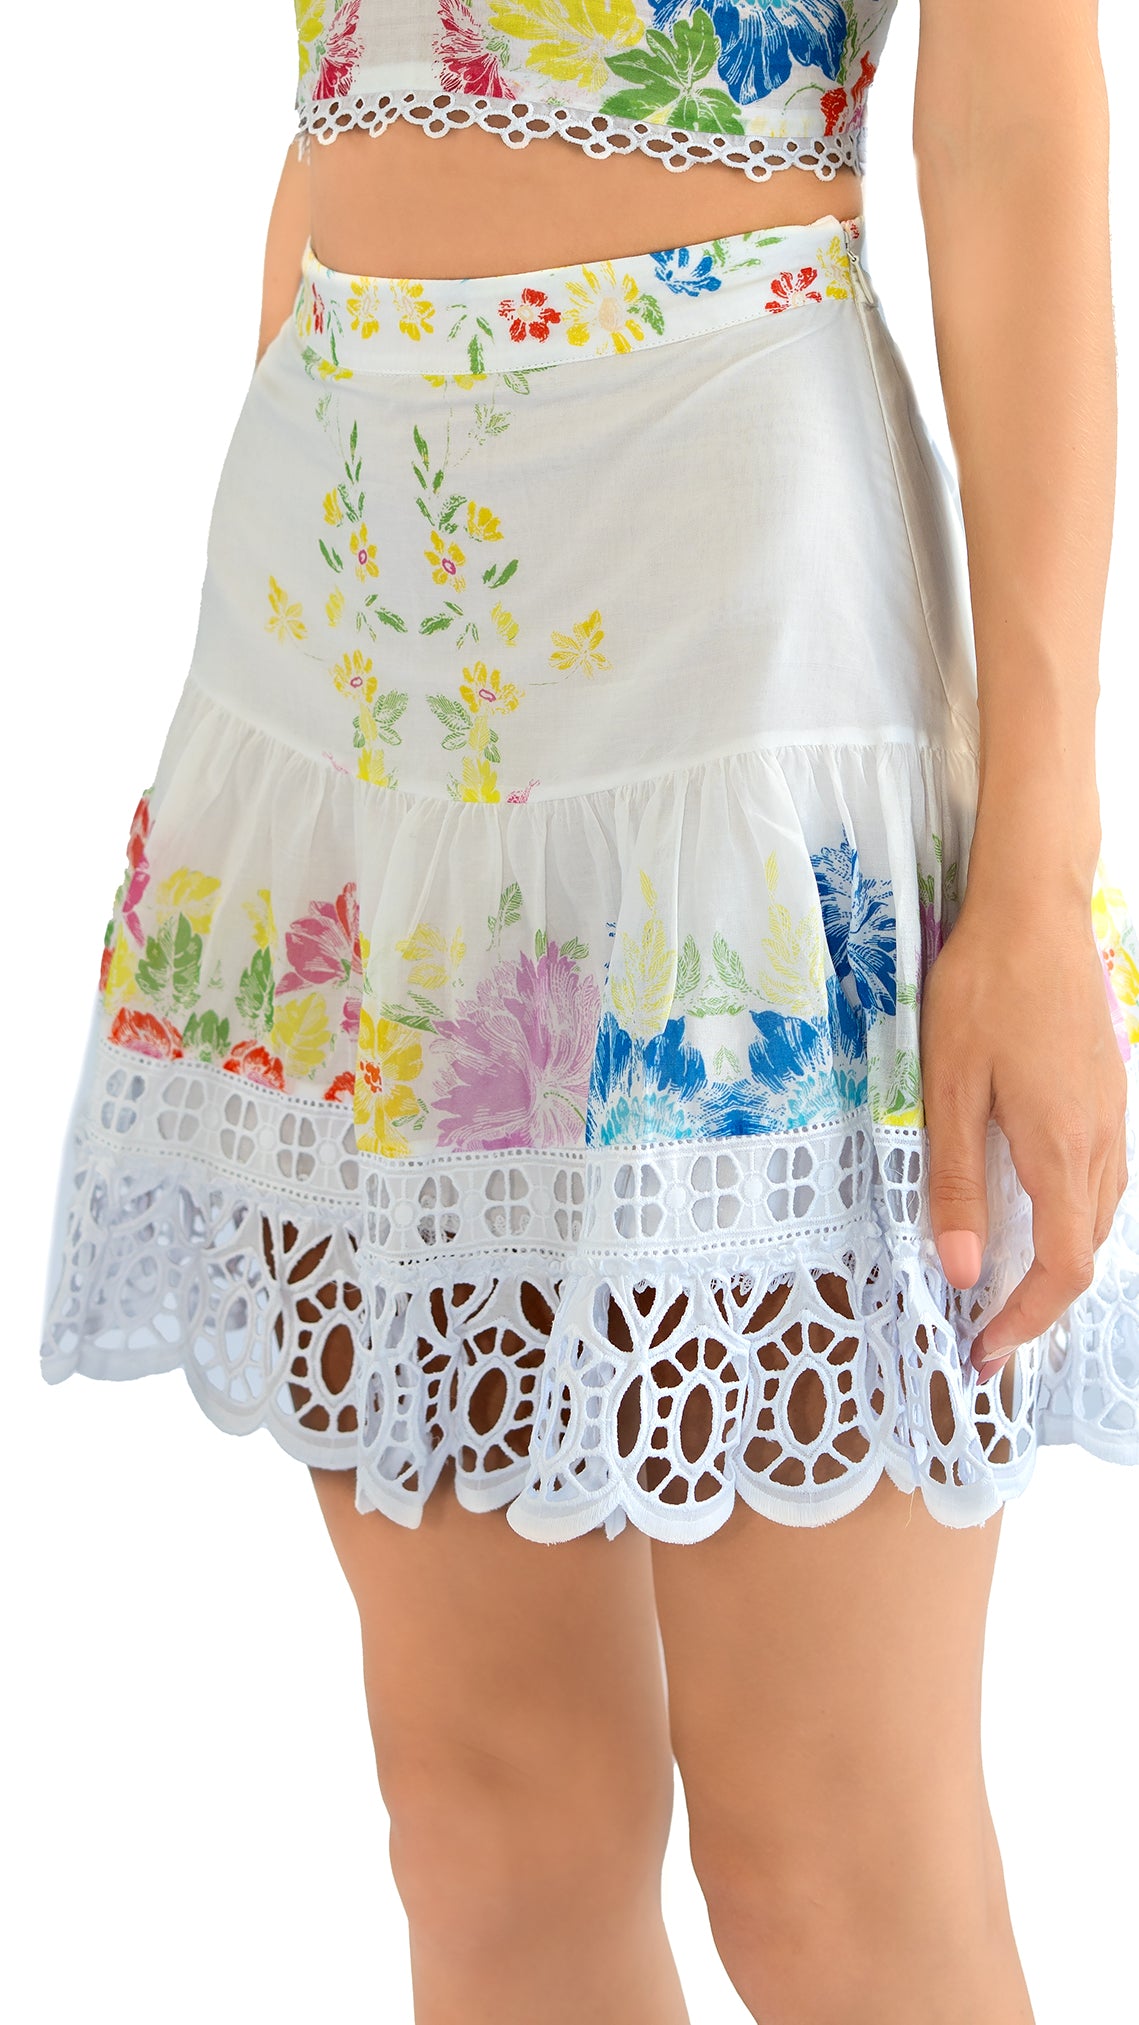 Charo Ruiz mini cotton skirt with lace details in white garden print